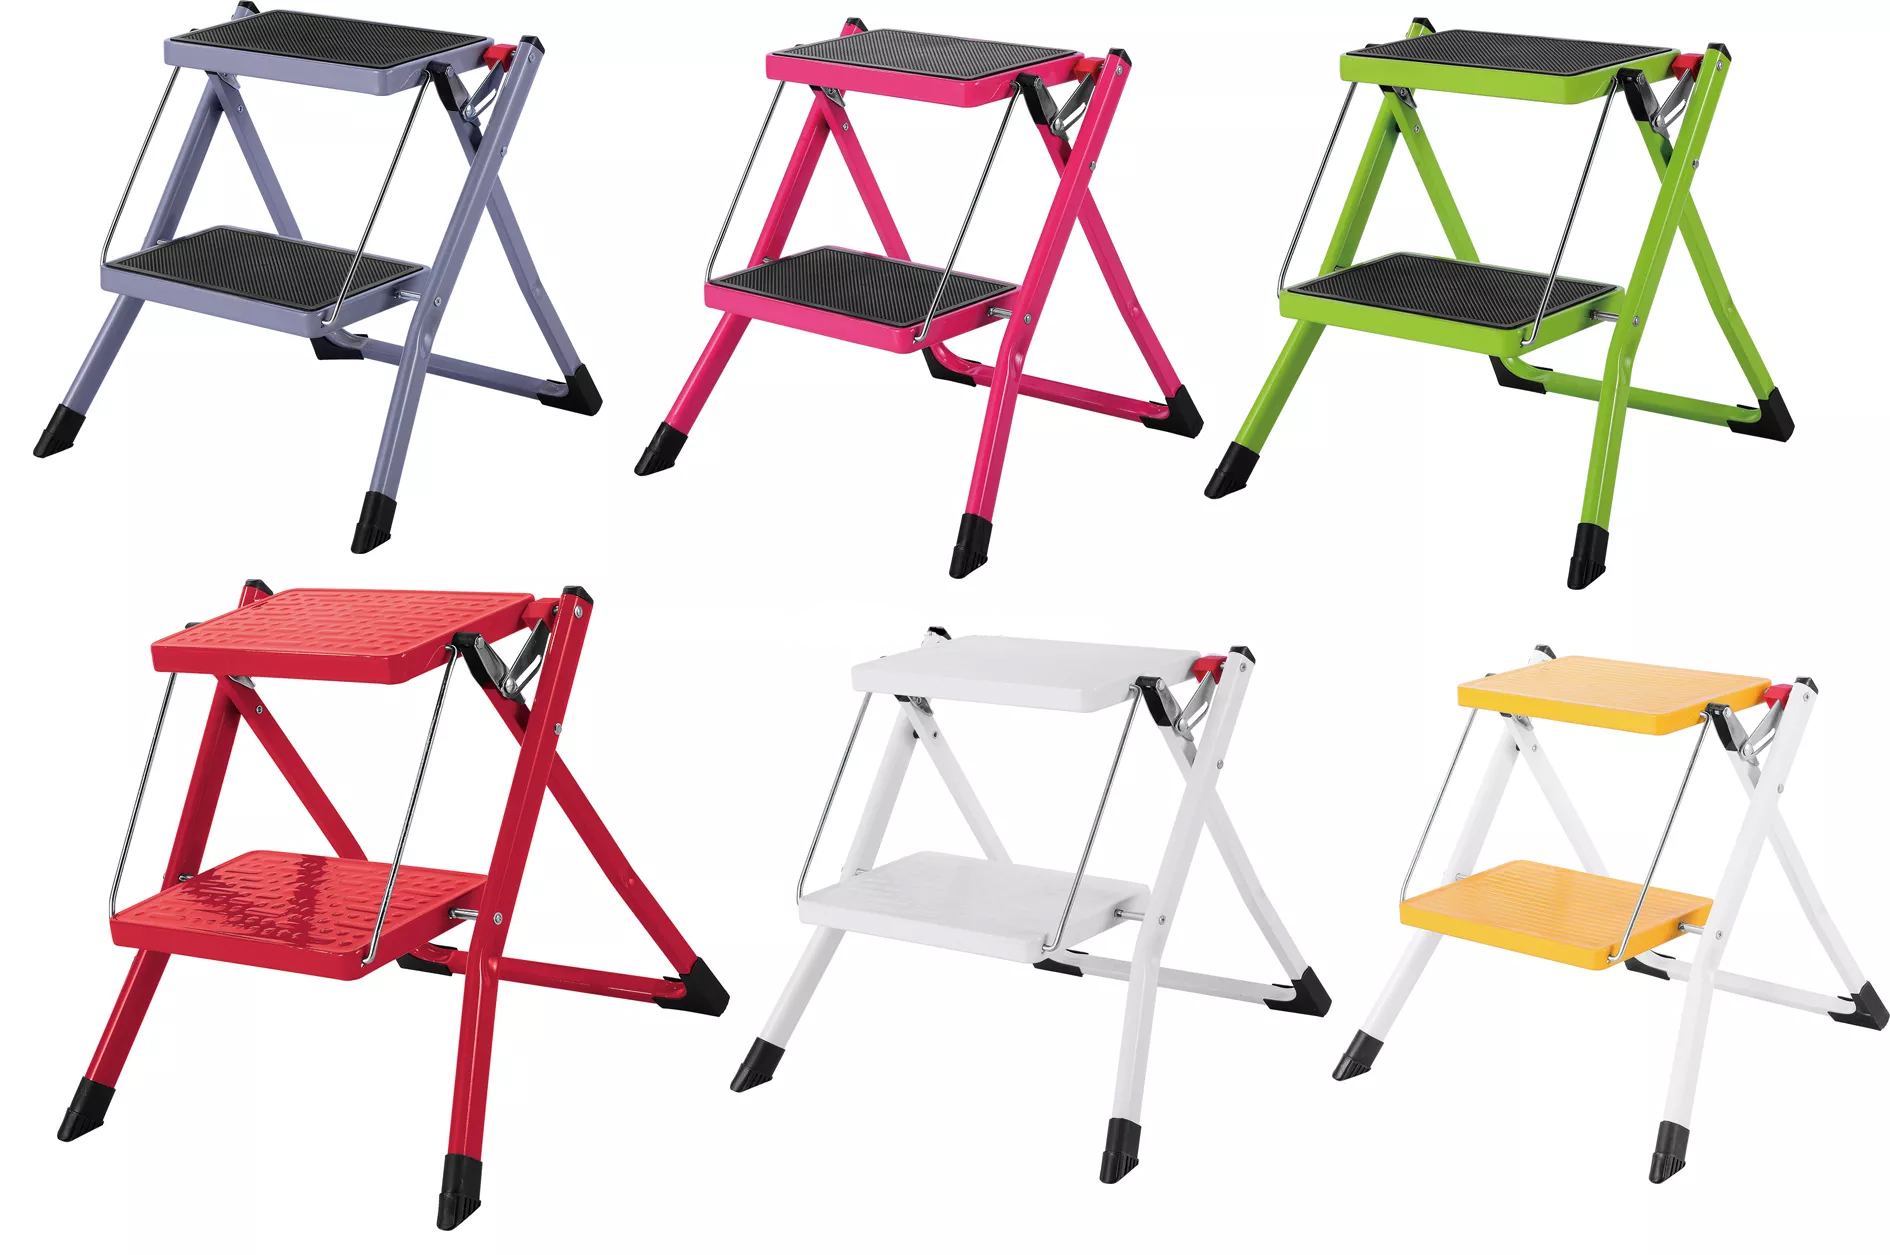 150 kgs max load metal folding Anti-slip safety platform small steel step stool ladder